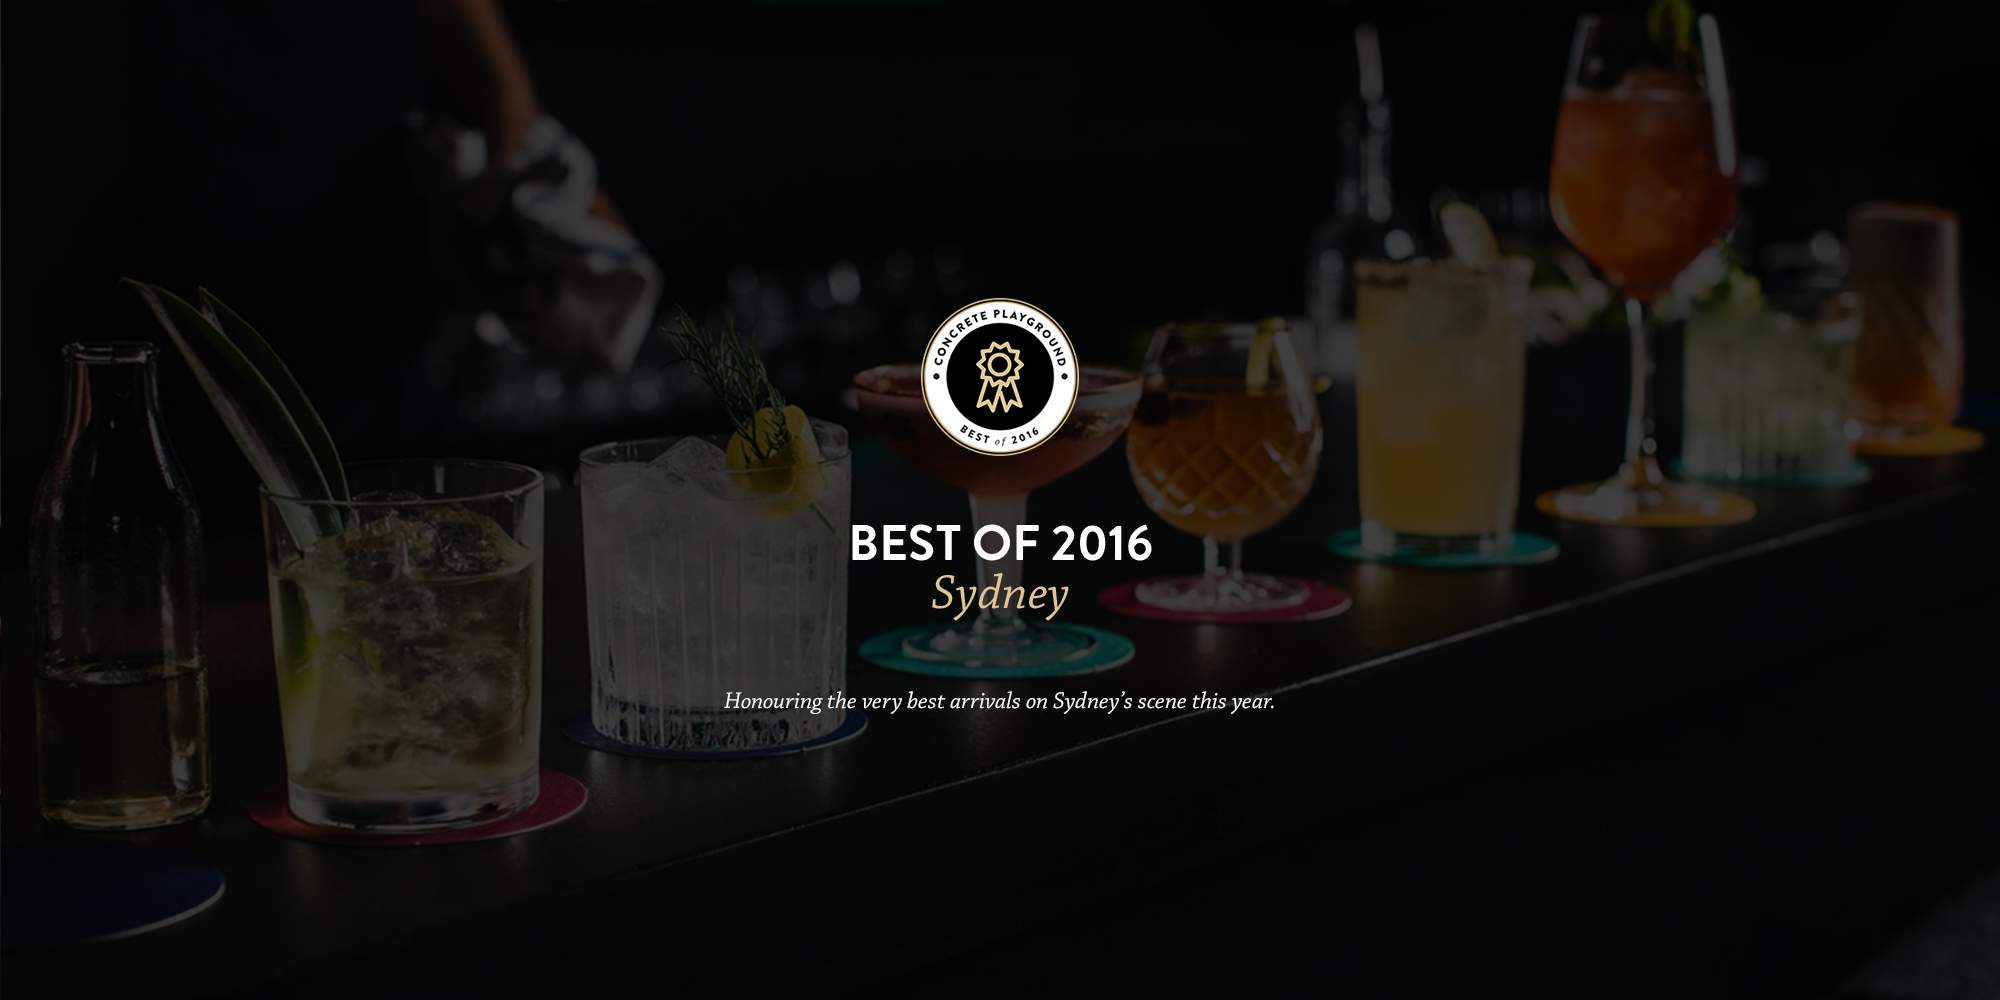 Best of 2016 Sydney